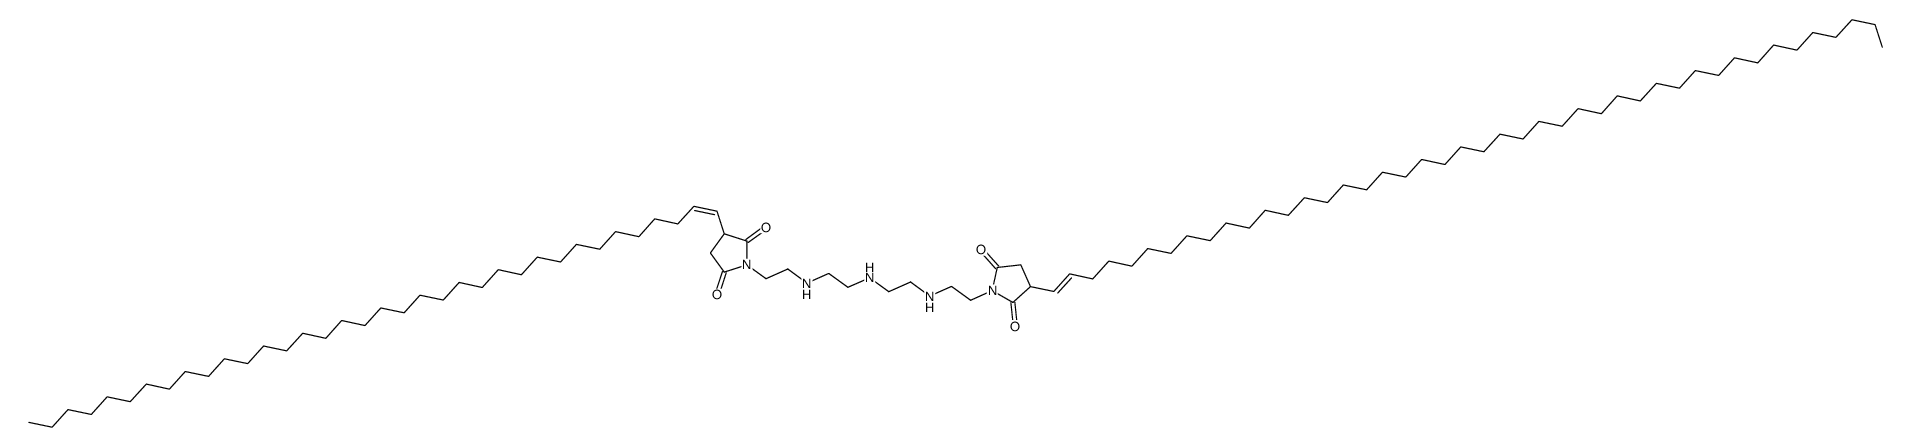 1-[2-[[2-[[2-[[2-[2,5-dioxo-3-(tetratetracontenyl)-1-pyrrolidinyl]ethyl]amino]ethyl]amino]ethyl]amino]ethyl]-3-(hexatriacontenyl)pyrrolidine-2,5-dione structure